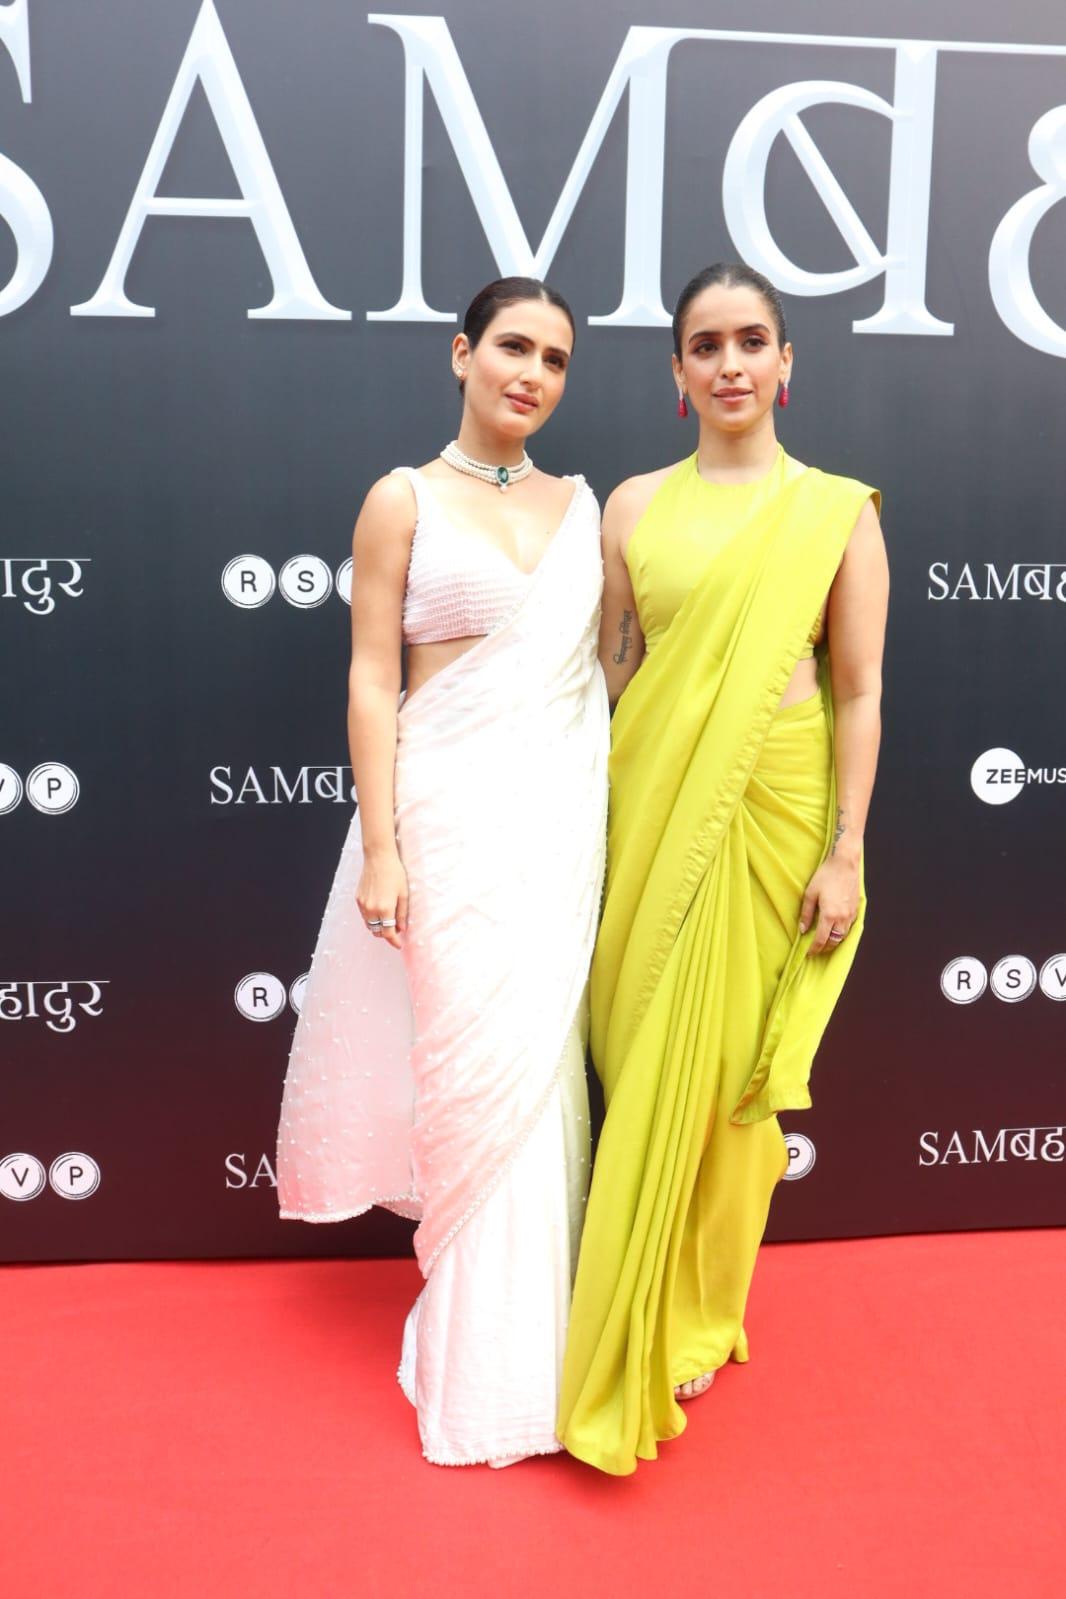 Fatima Sana Shaikh and Sanya Malhotra looked gorgeous as they walked the red carpet wearing beautiful sarees